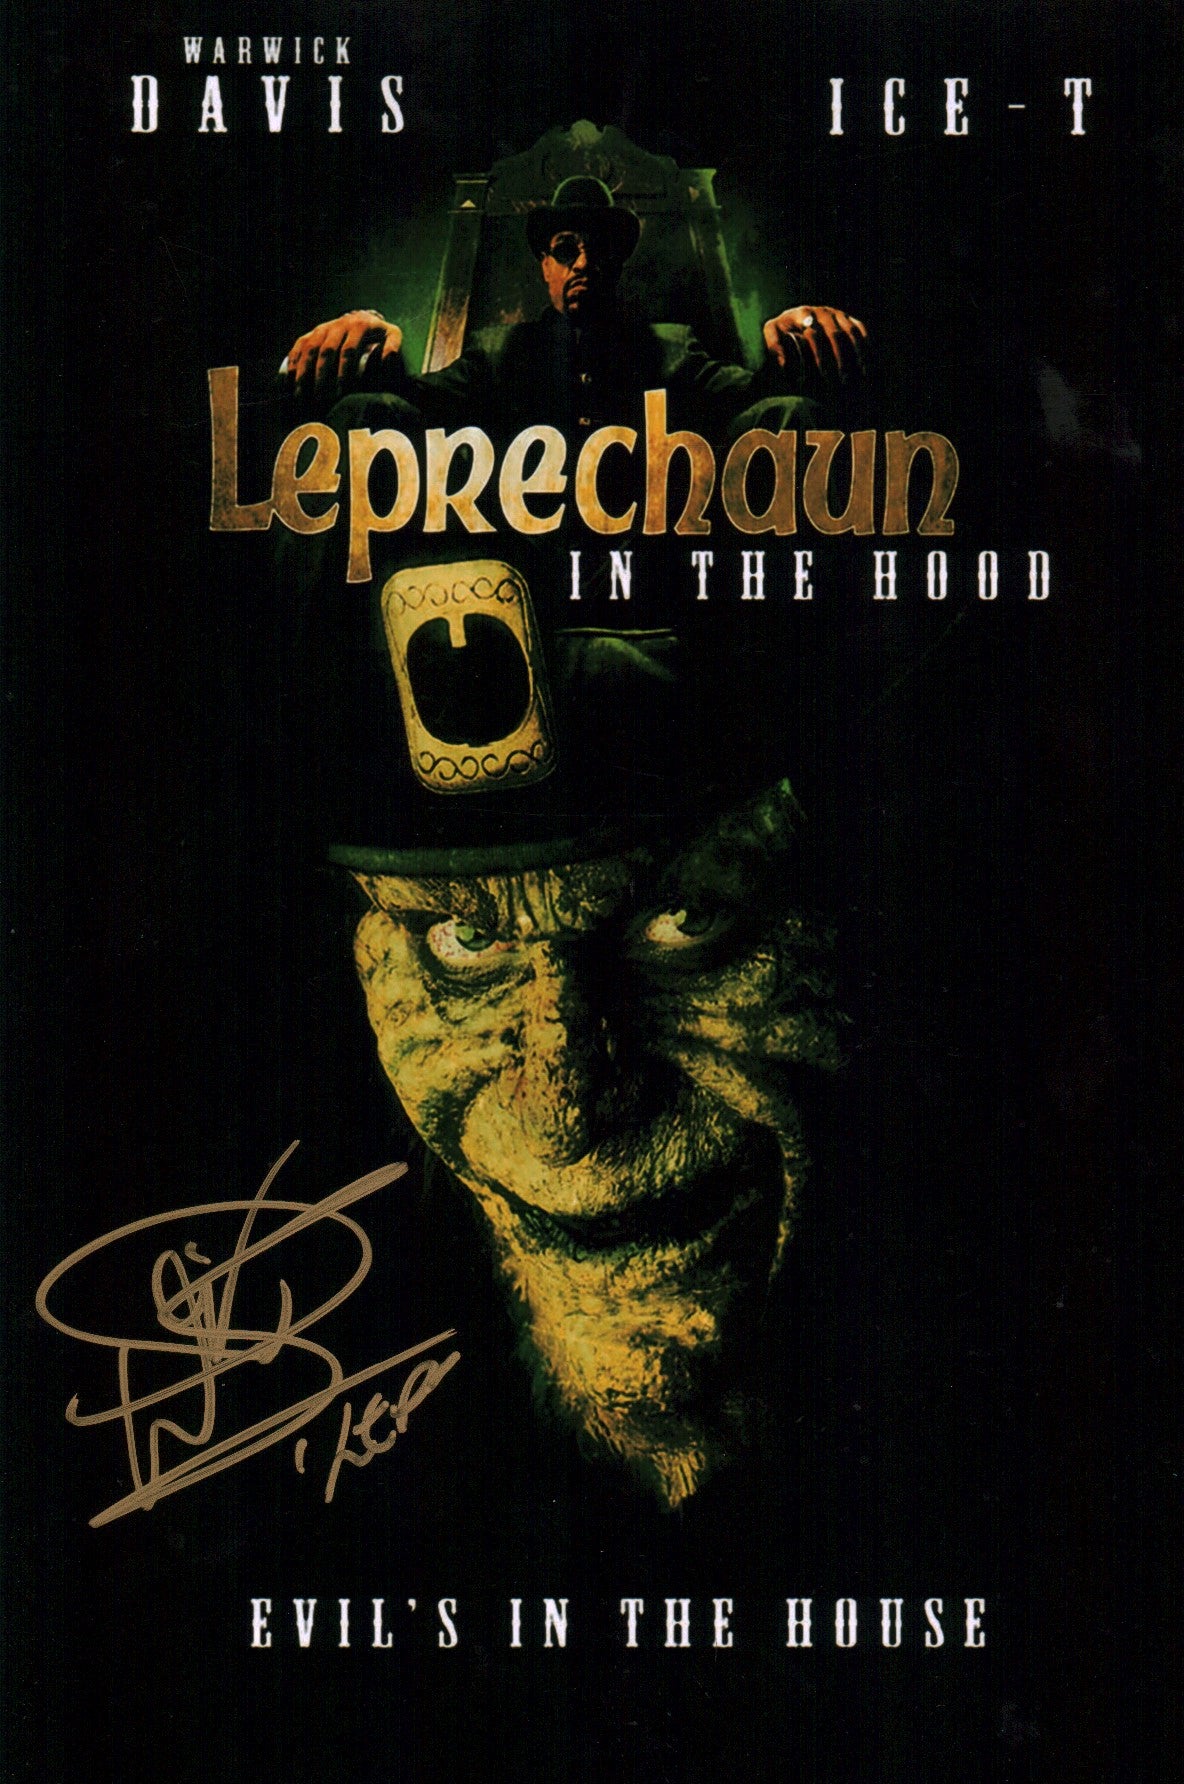 Warwick Davis Leprechaun In The Hood 8x12 Signed Photo JSA COA Certified Autograph